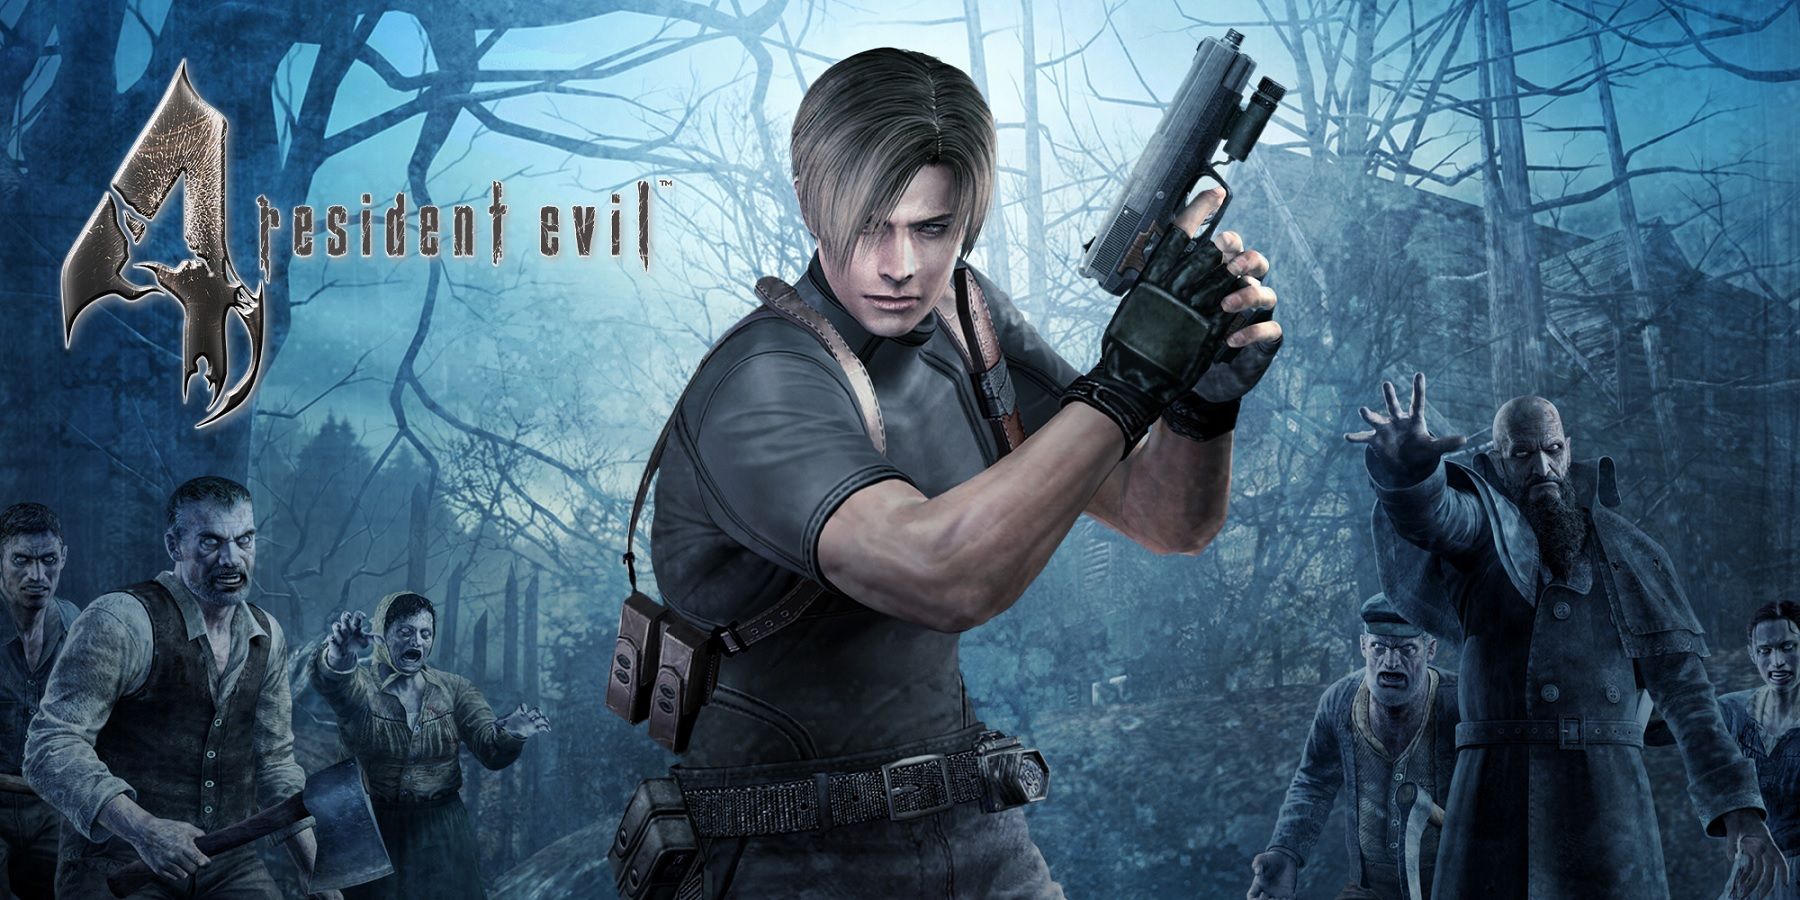 Resident Evil 4 no Steam